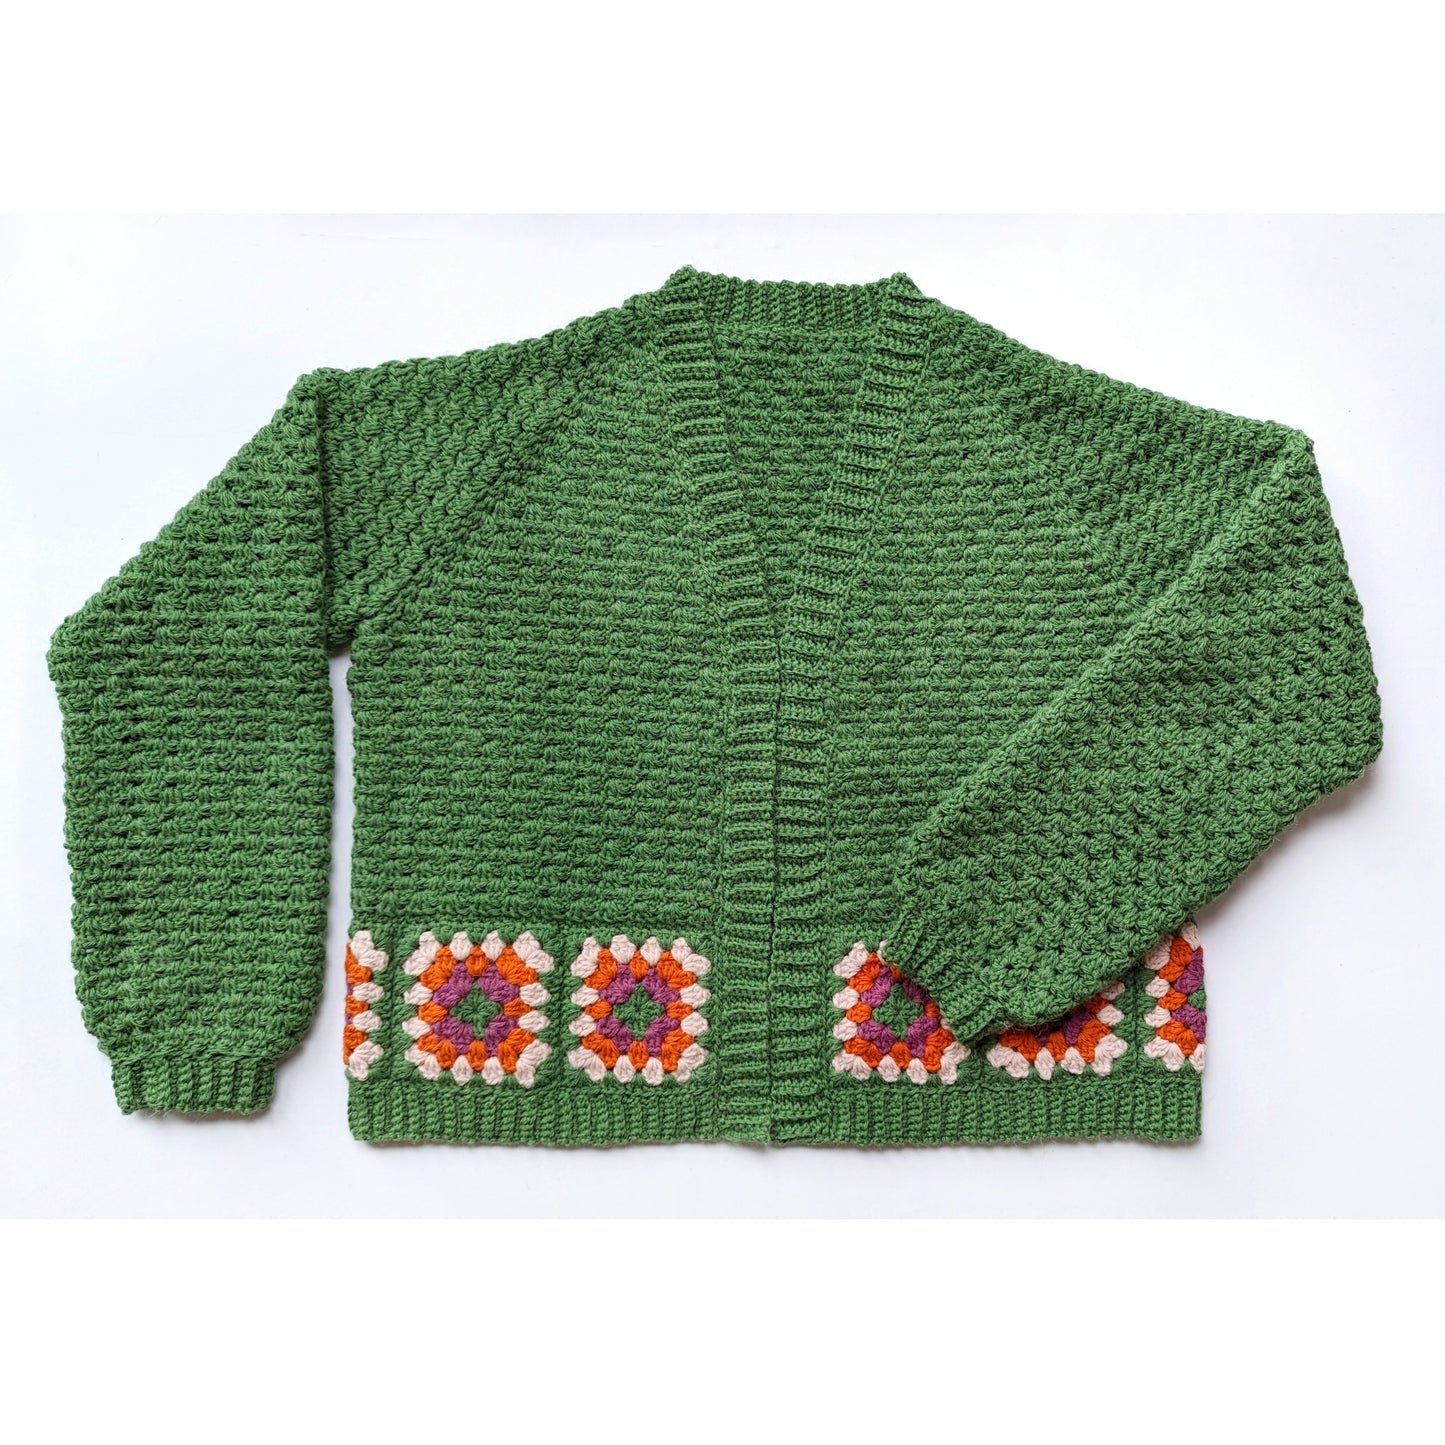 Lowrider cardigan crochet pattern - Downloadable PDF